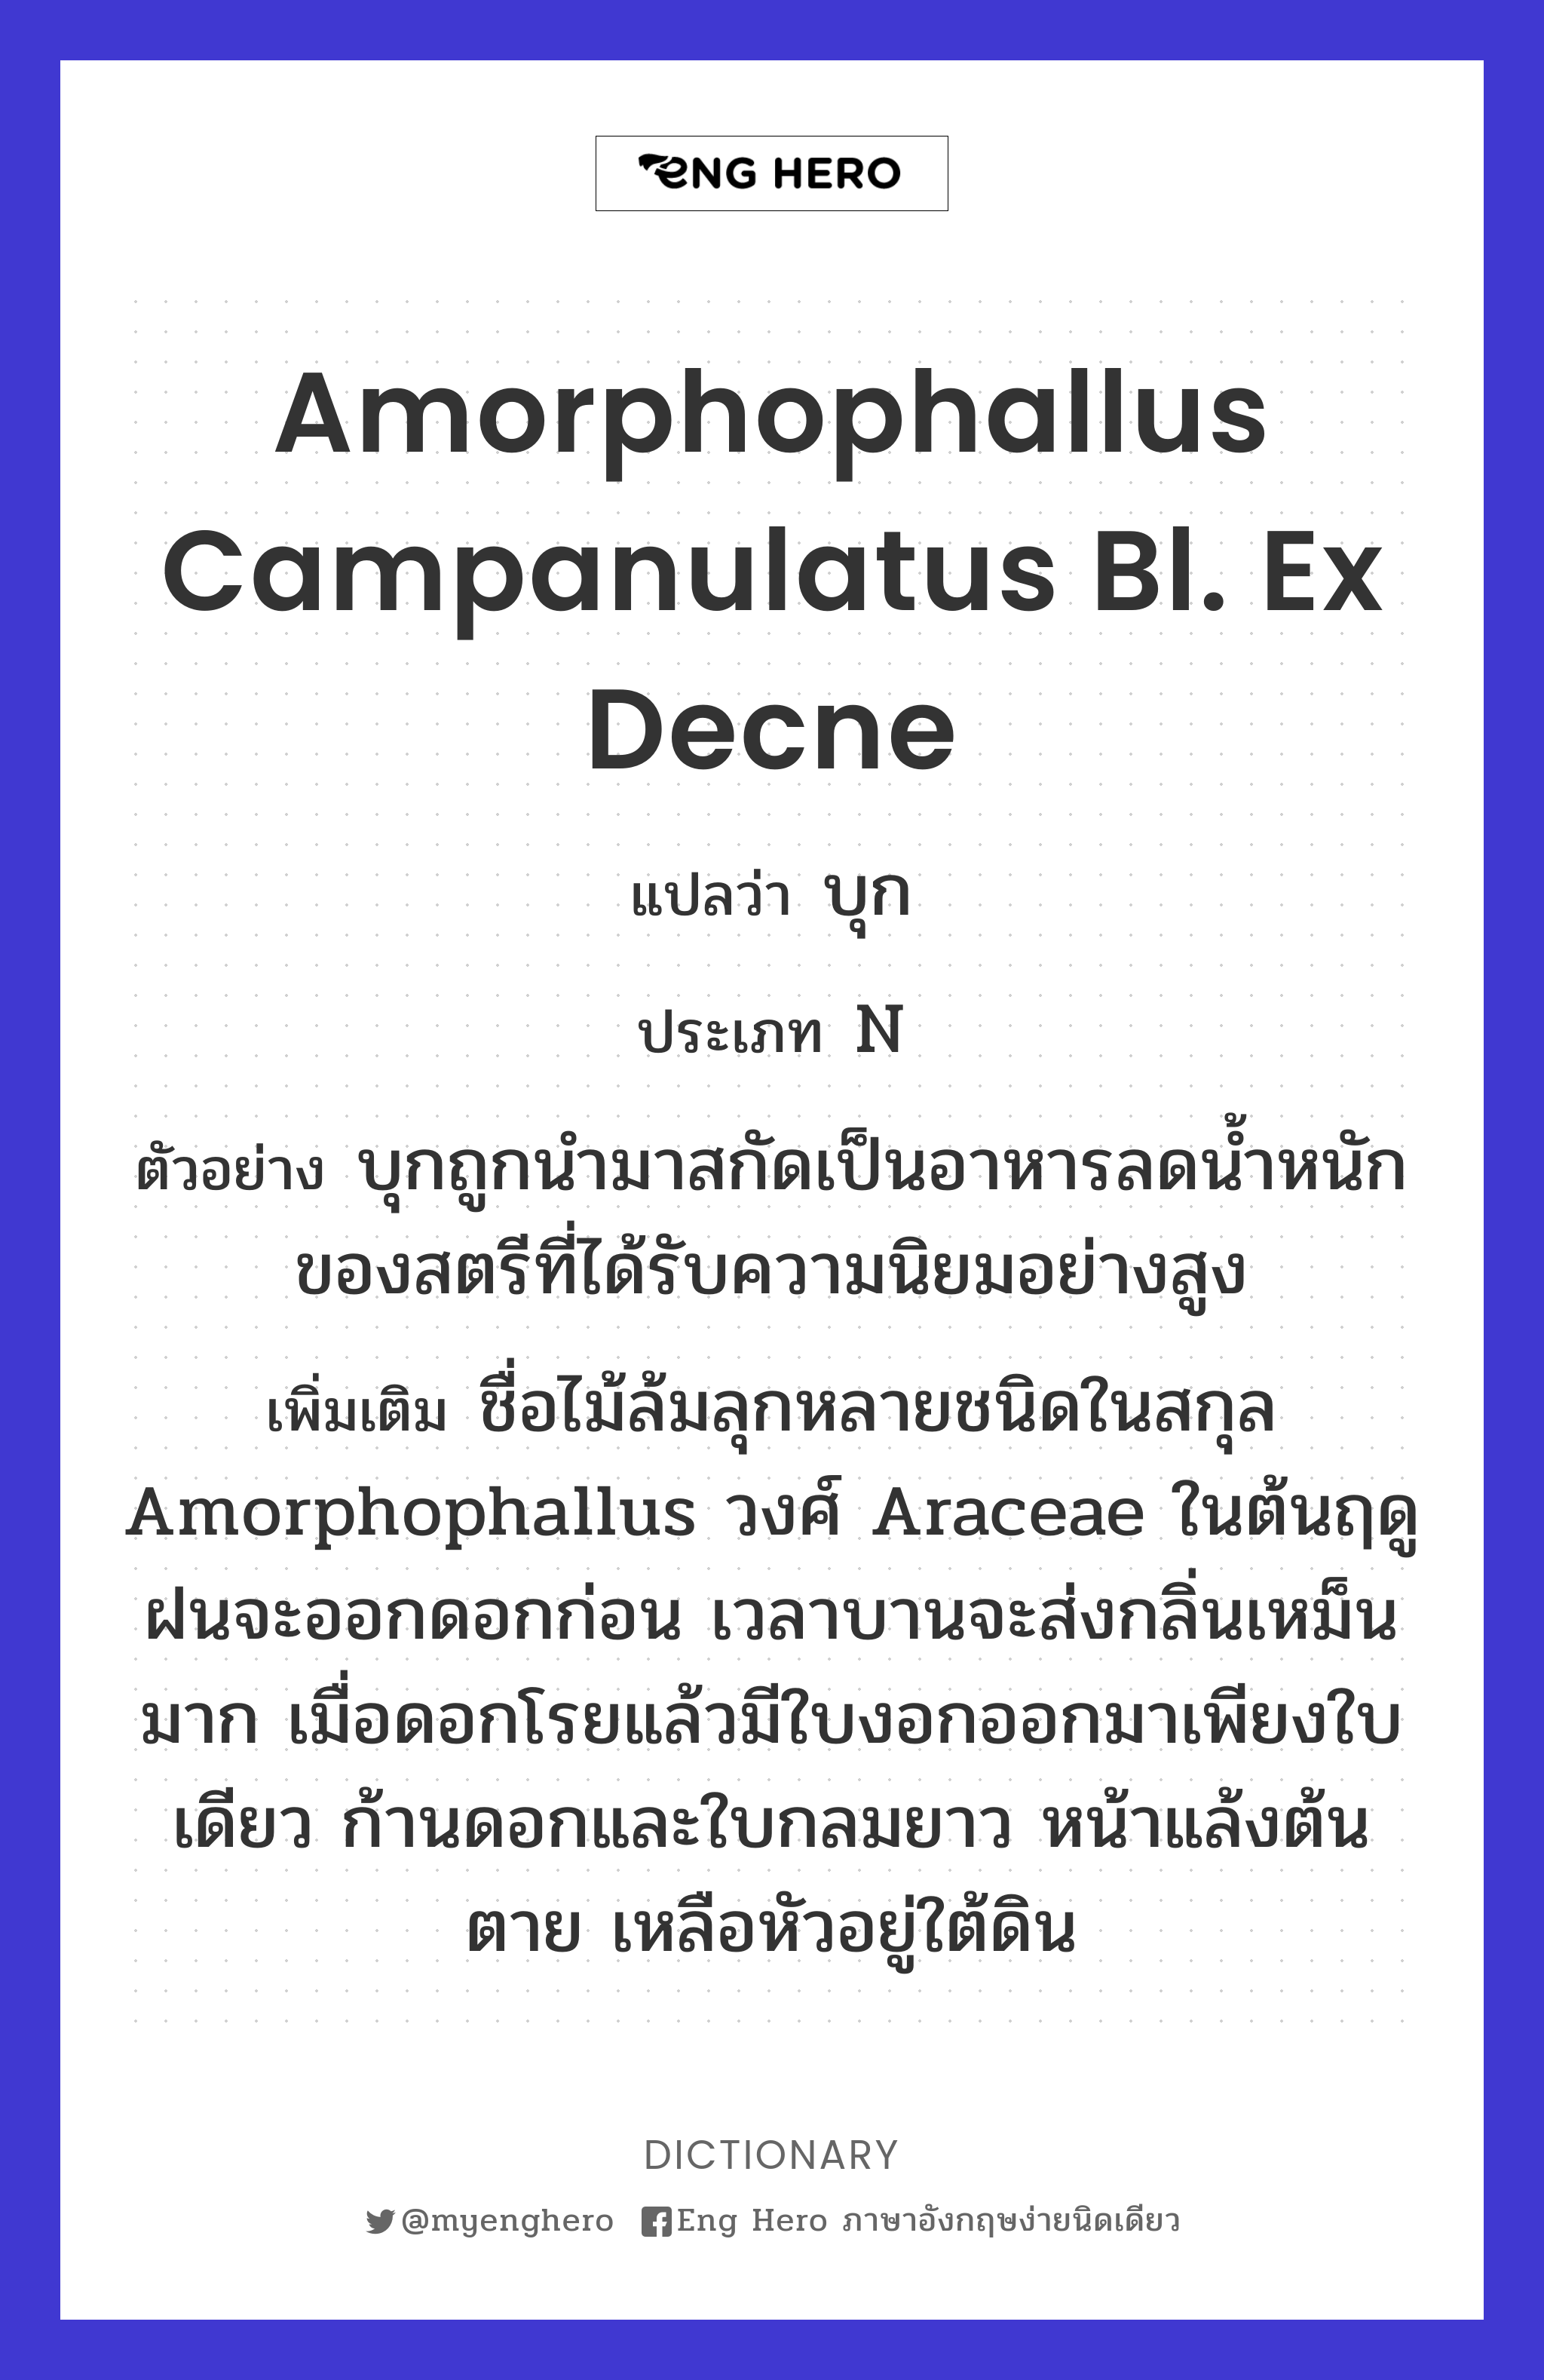 Amorphophallus campanulatus Bl. ex Decne